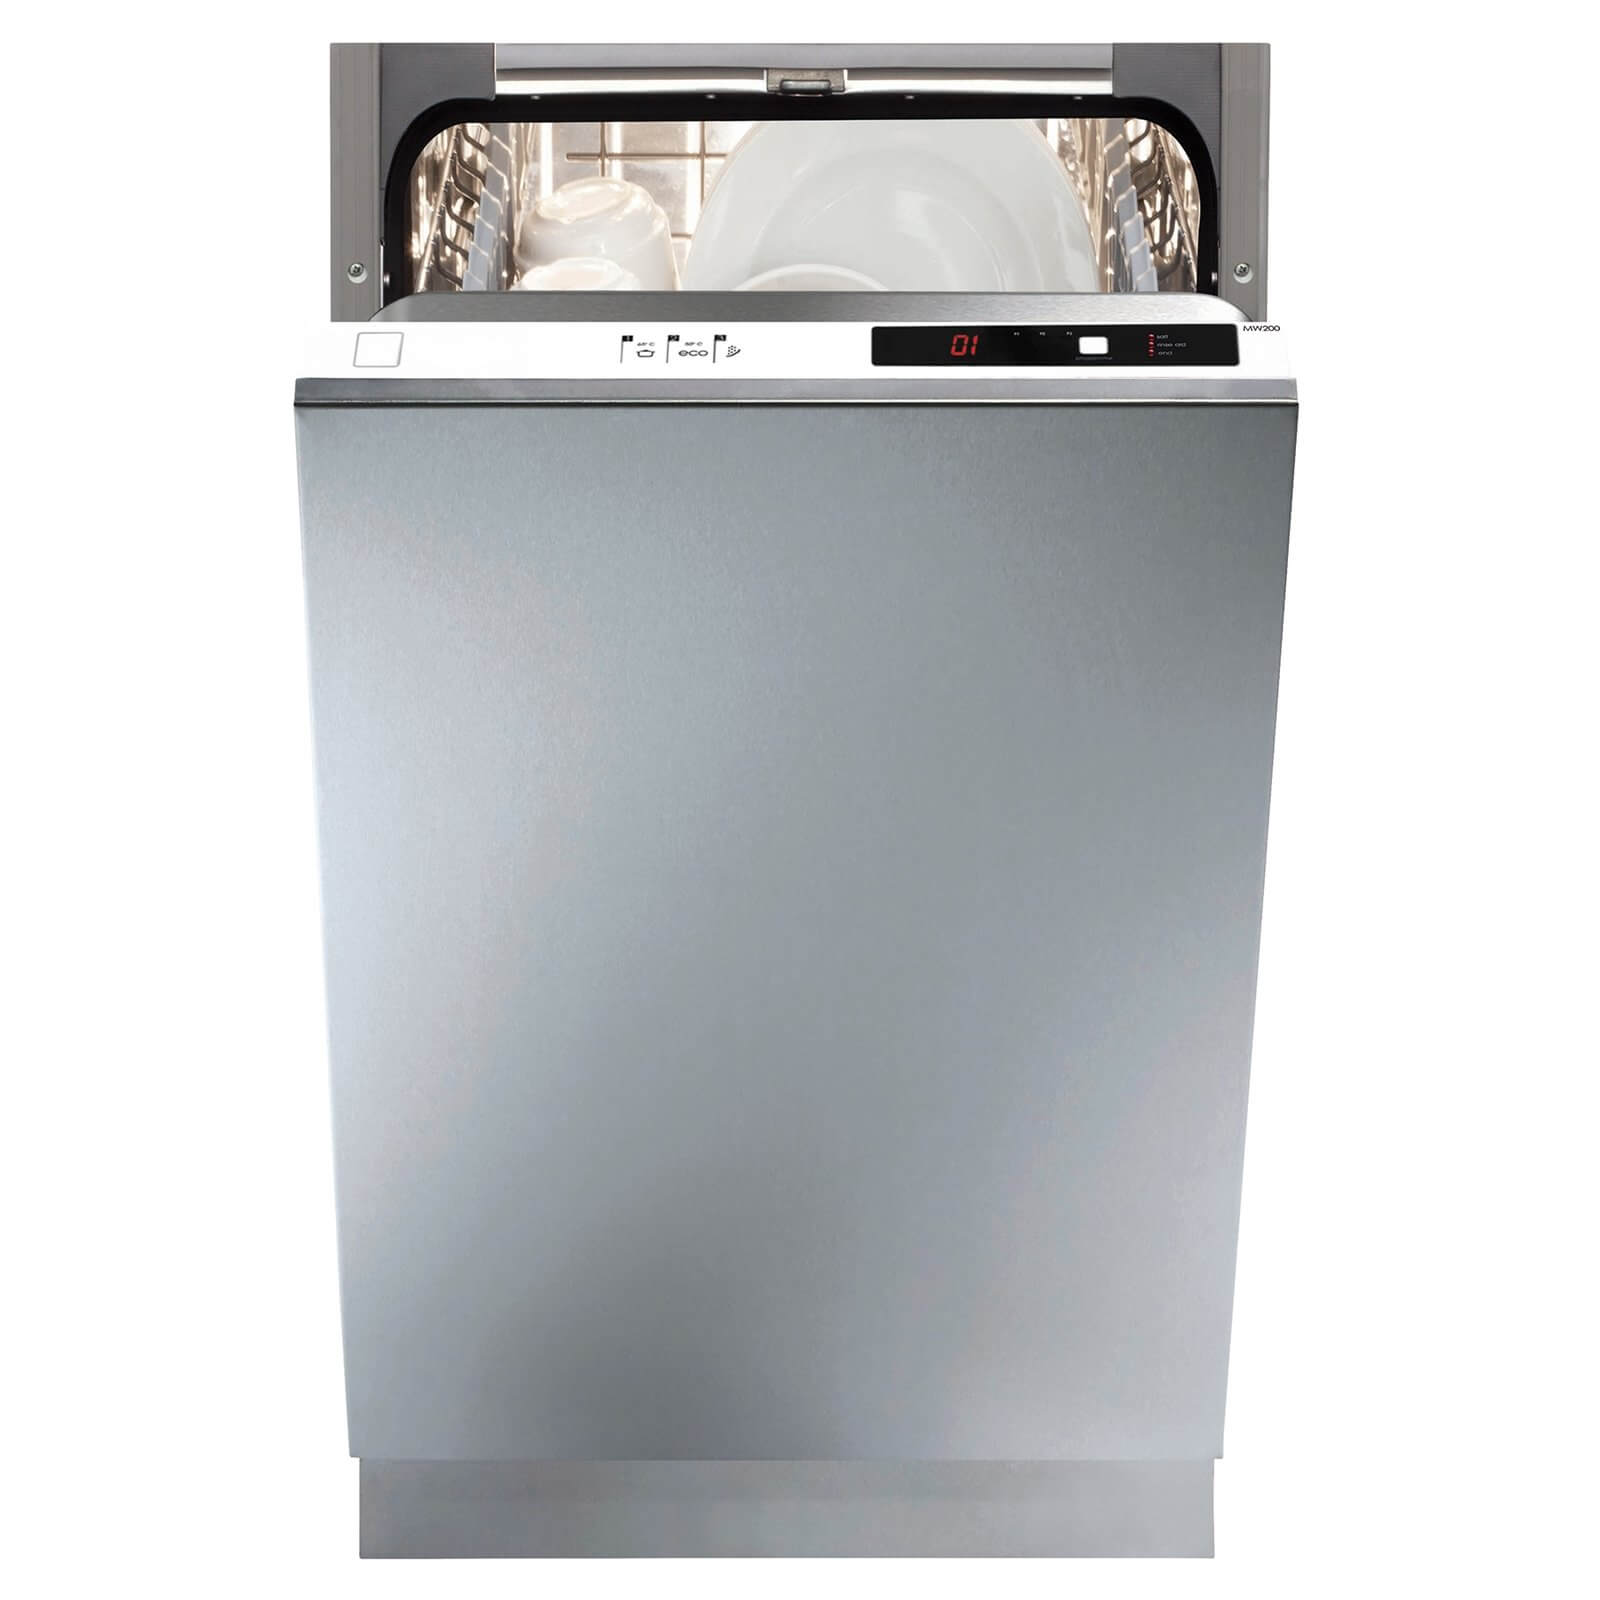 MW200 45cm Integrated Slimline Dishwasher